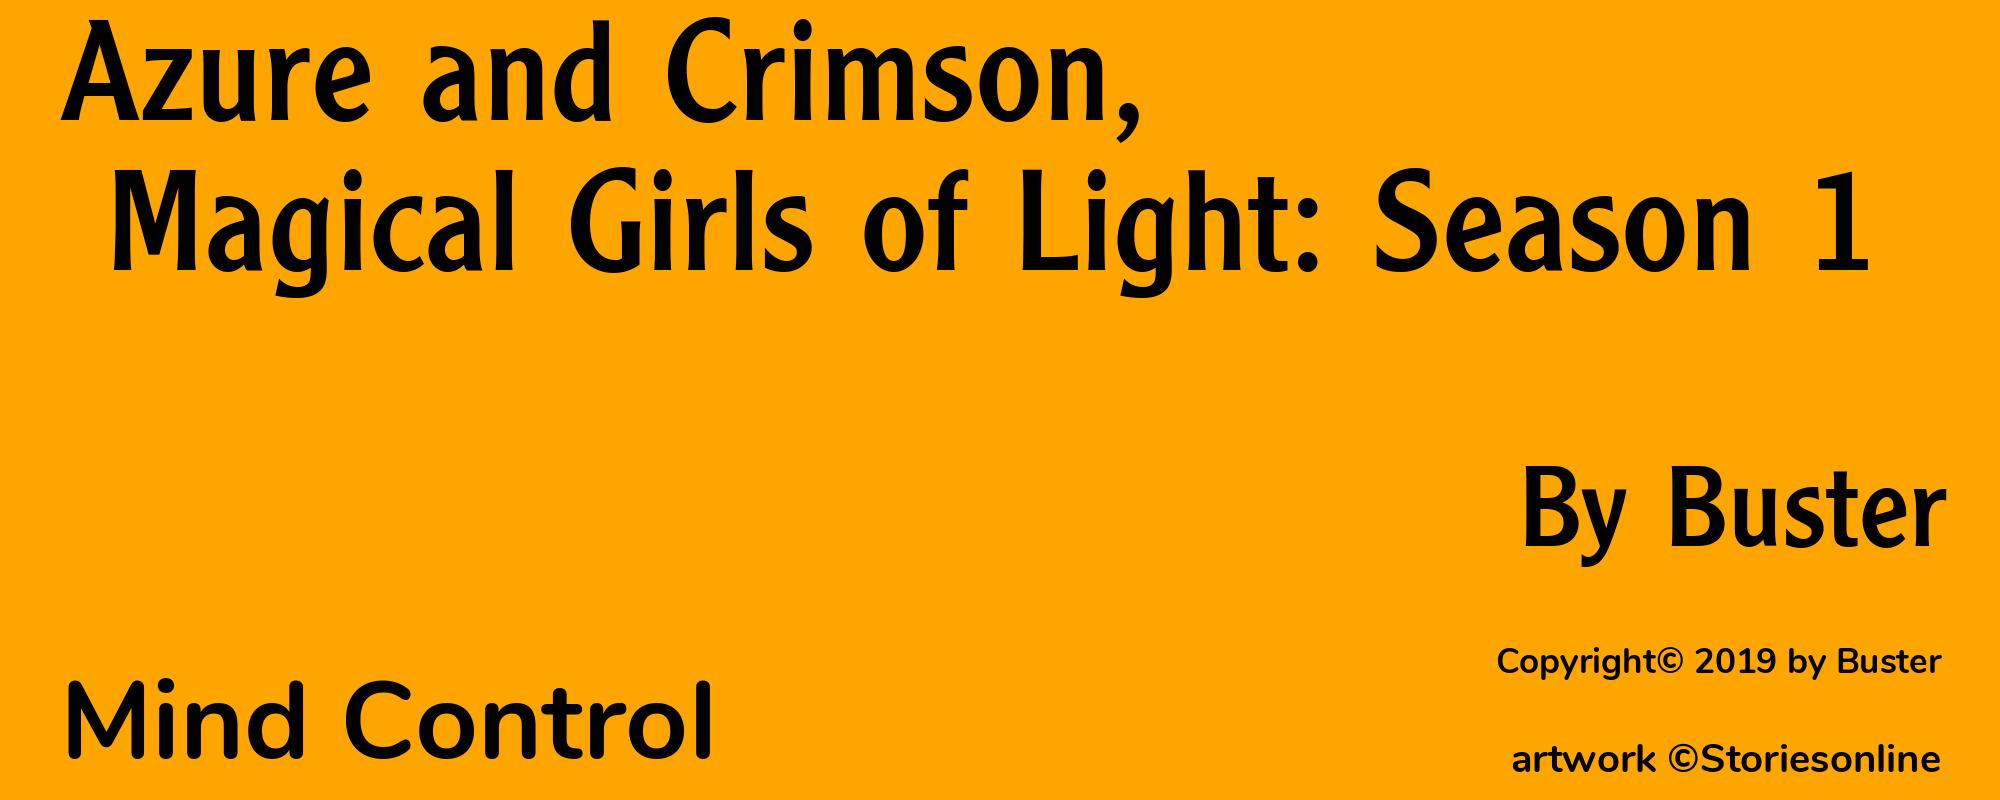 Azure and Crimson, Magical Girls of Light: Season 1 - Cover